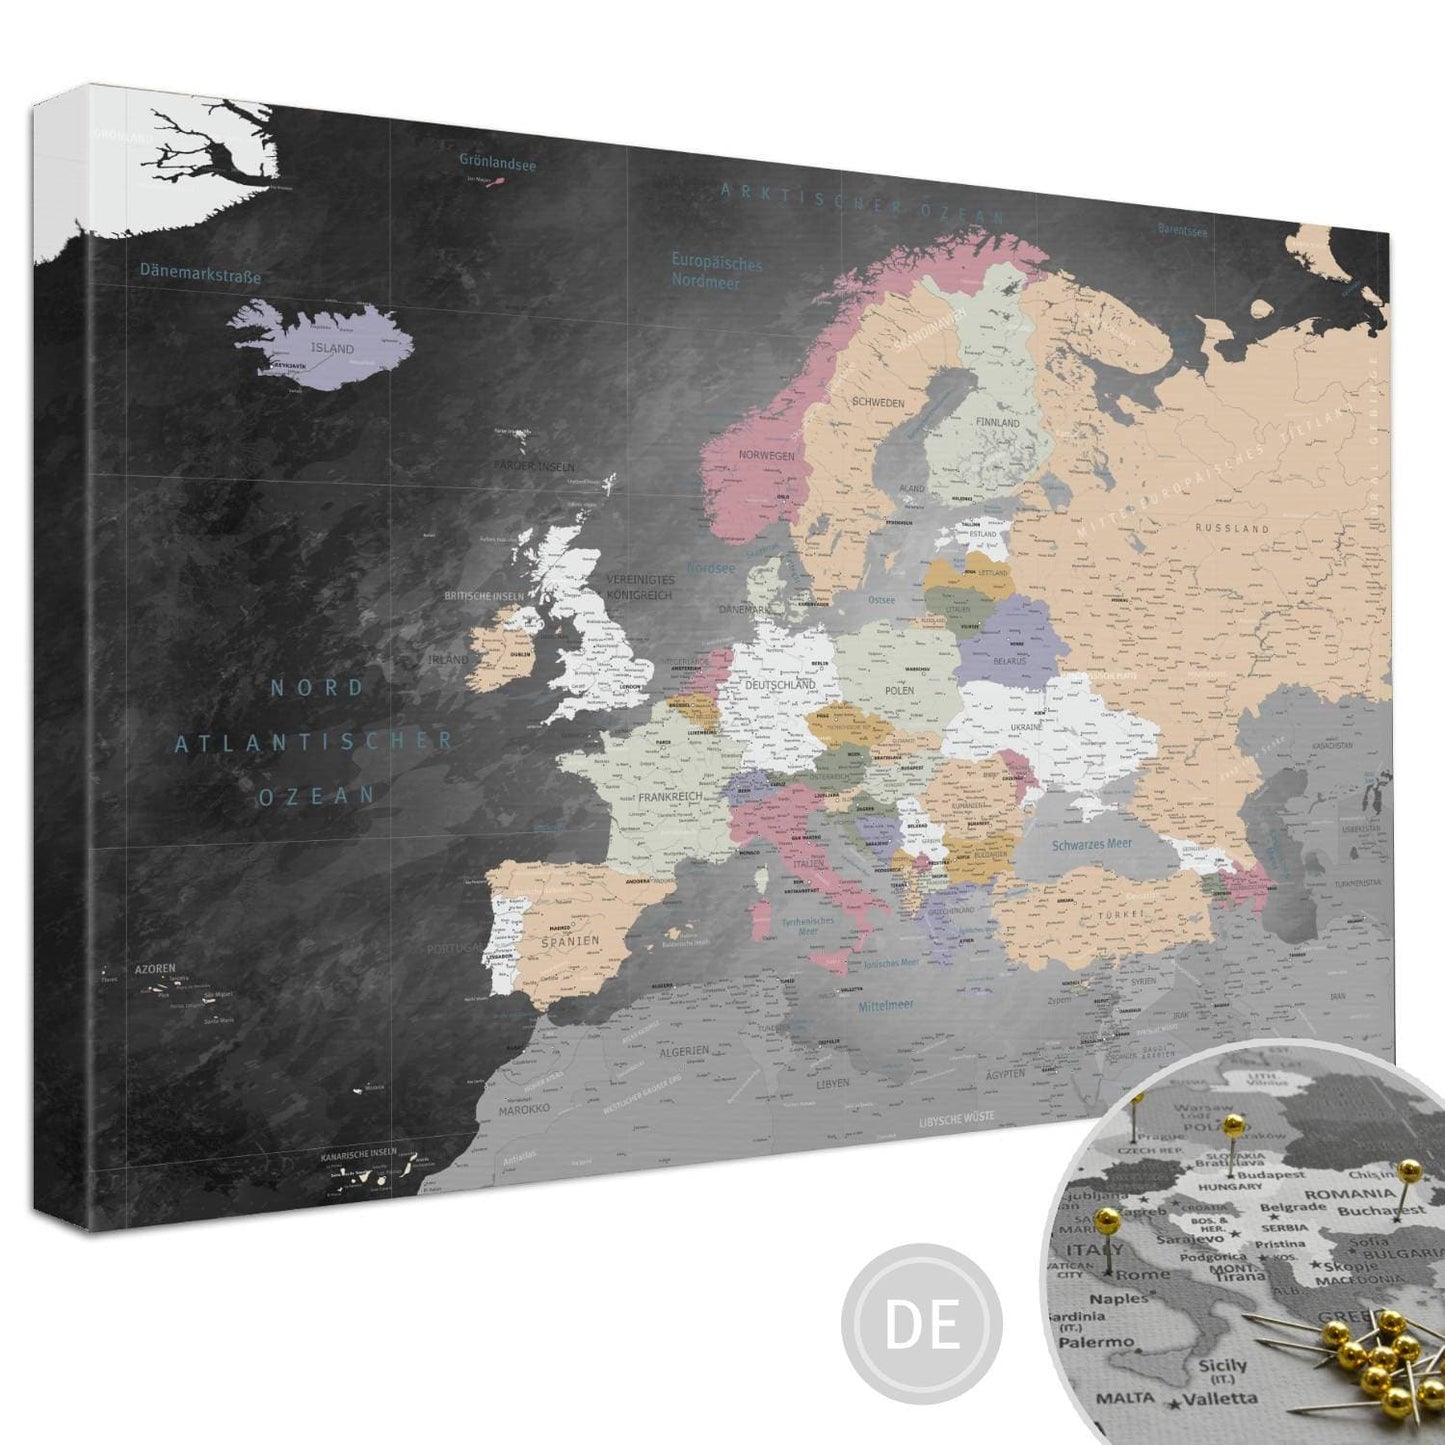 Leinwandbild - Europakarte Schiefergrau - Pinnwand, Deutsch|Canvas Art - Europe Map Slate Gray- Pinboard, German